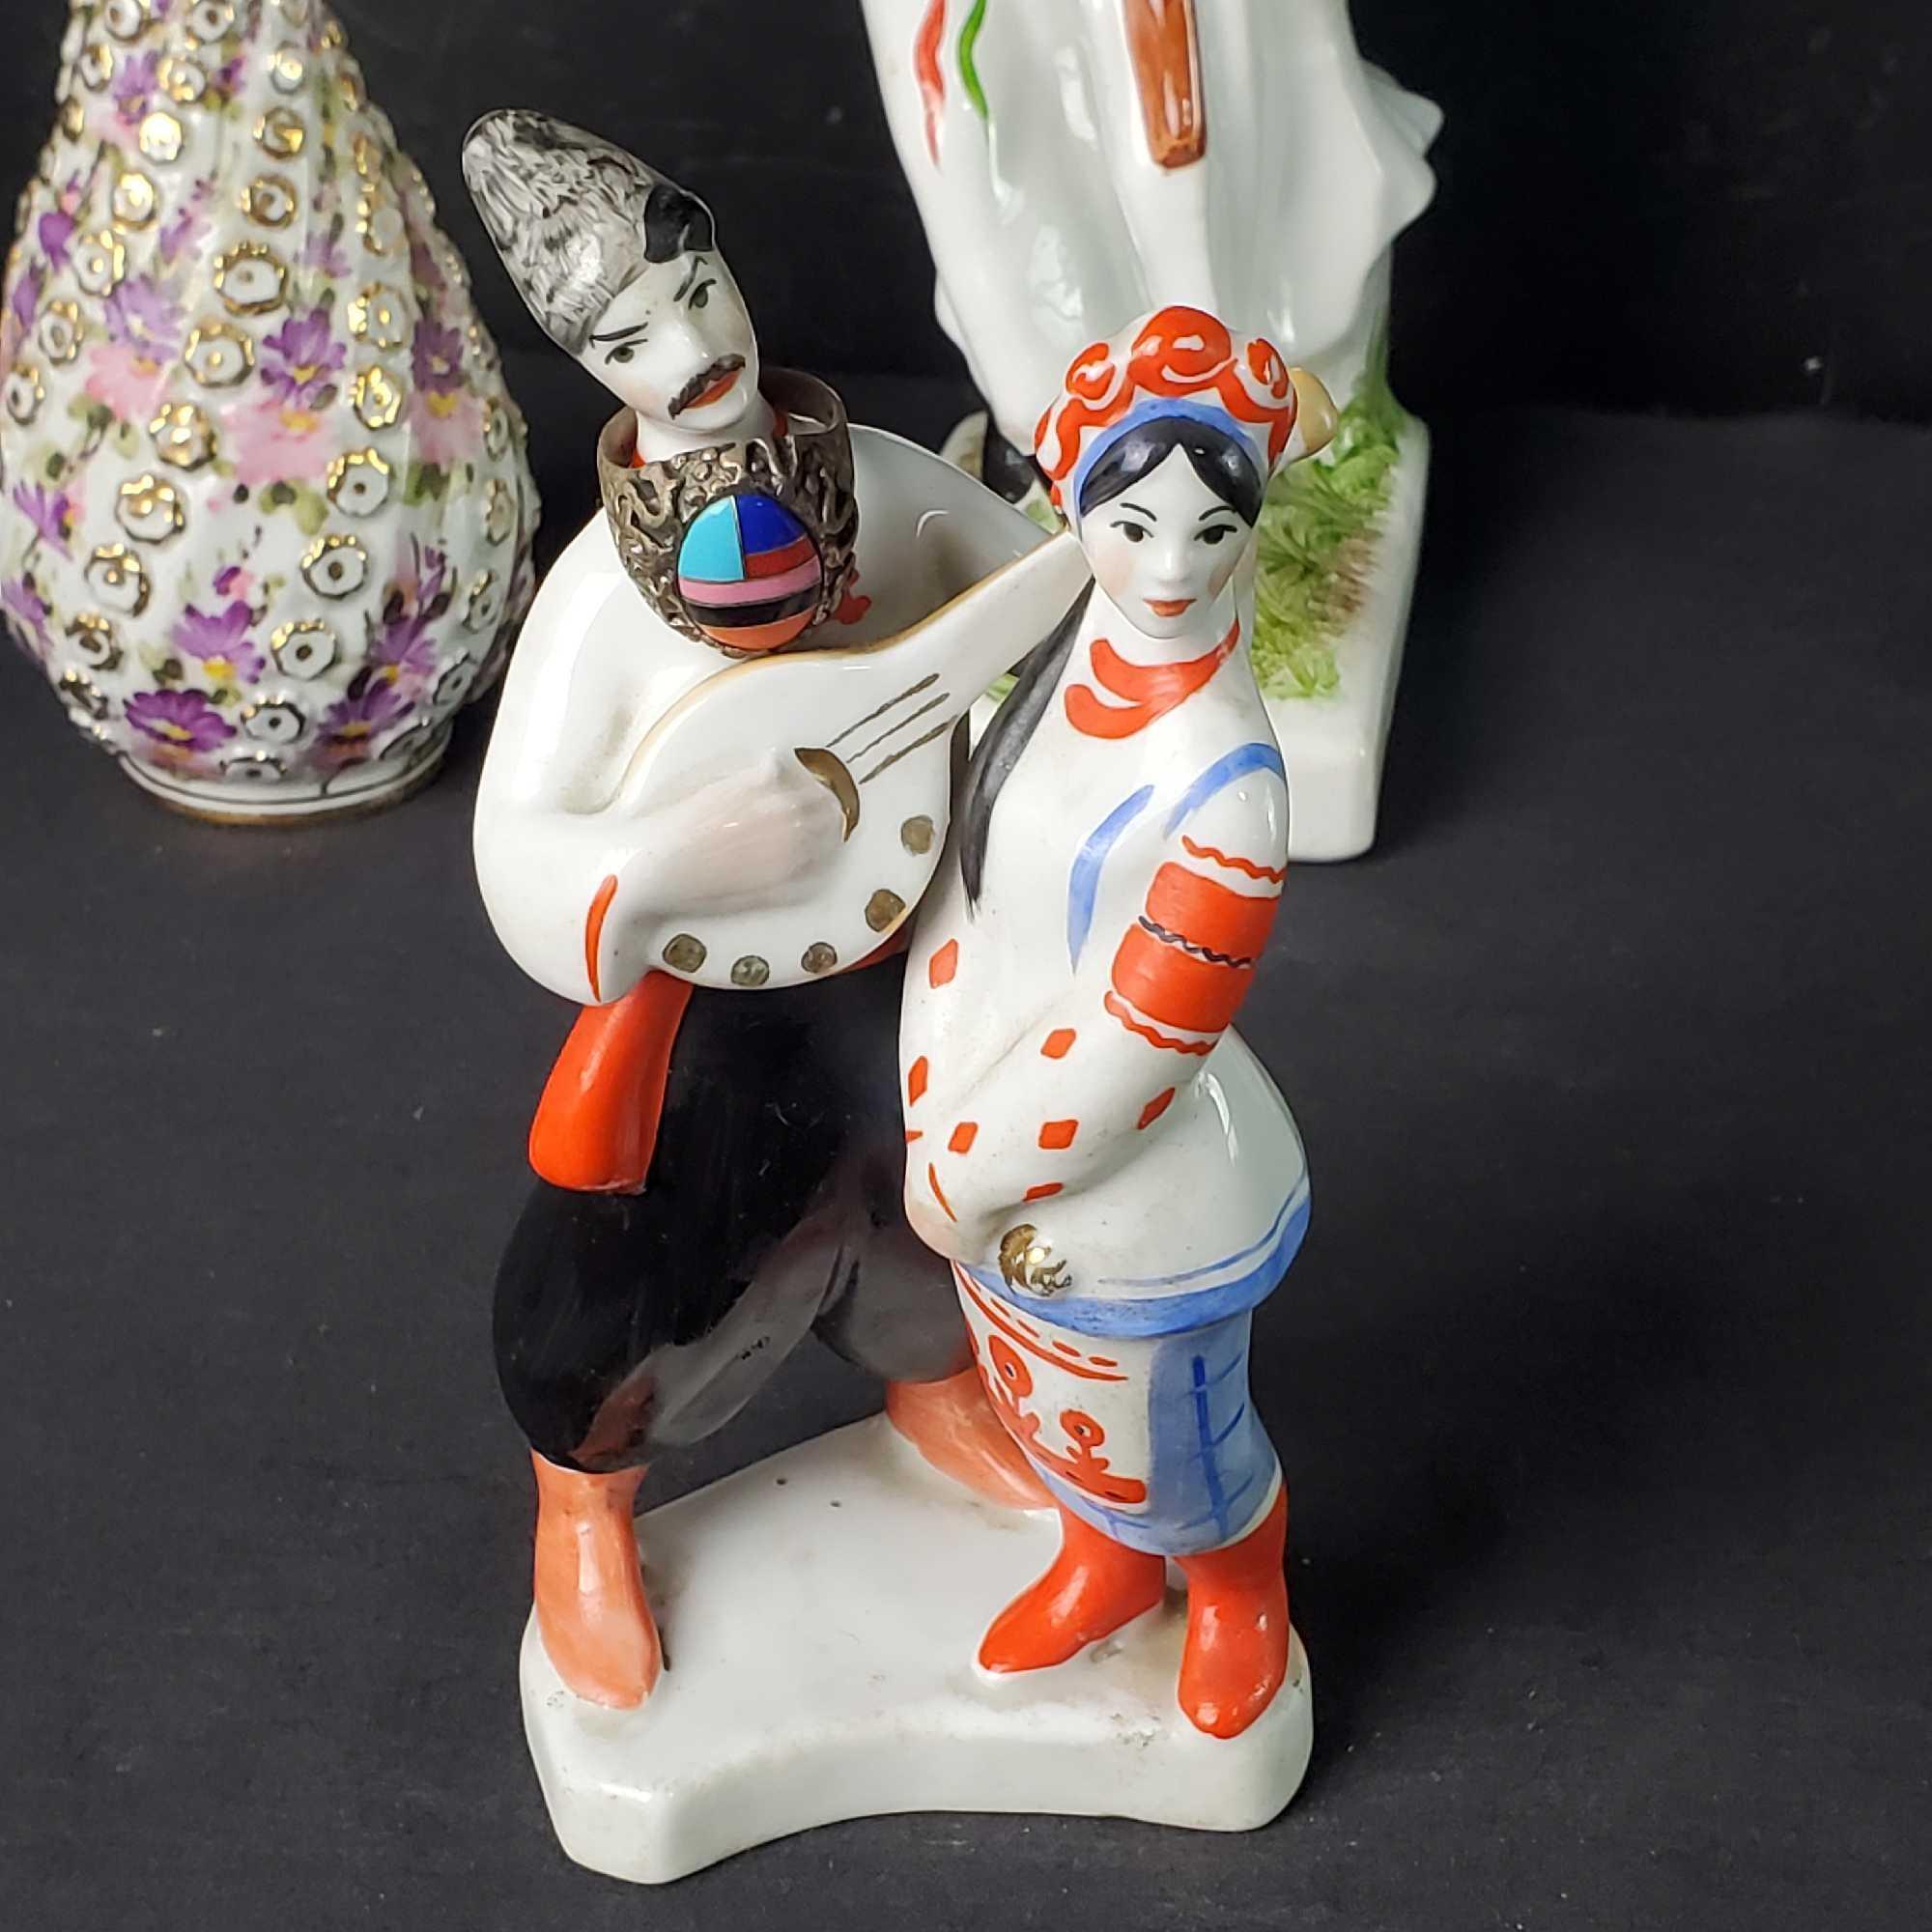 Lot of misc. figurines small Turkish handmade vase heavy elephant statue handmade porcelain figure